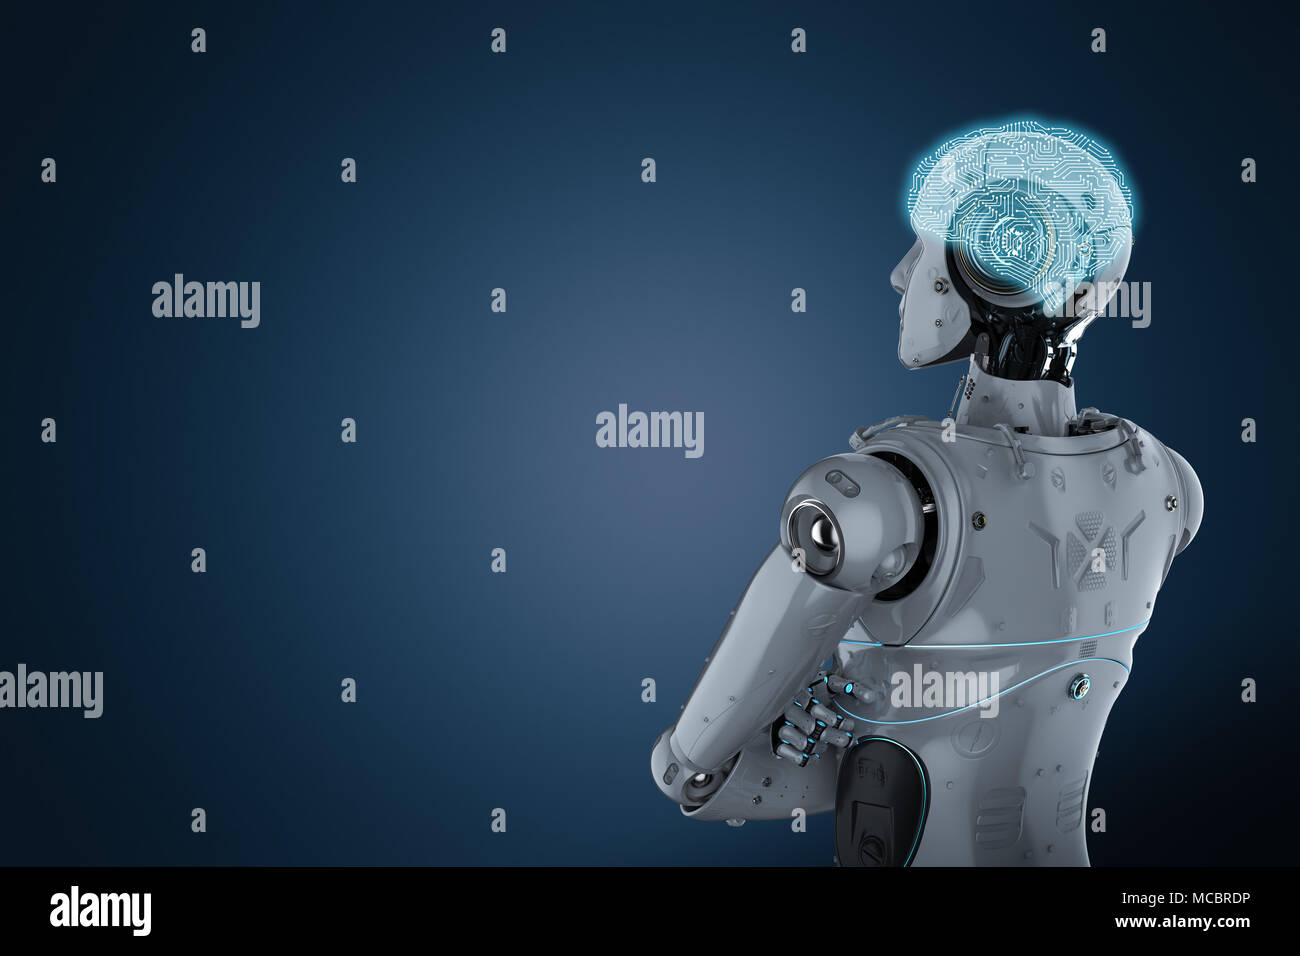 https://c8.alamy.com/comp/MCBRDP/3d-rendering-humanoid-robot-arm-crossed-with-ai-brain-MCBRDP.jpg